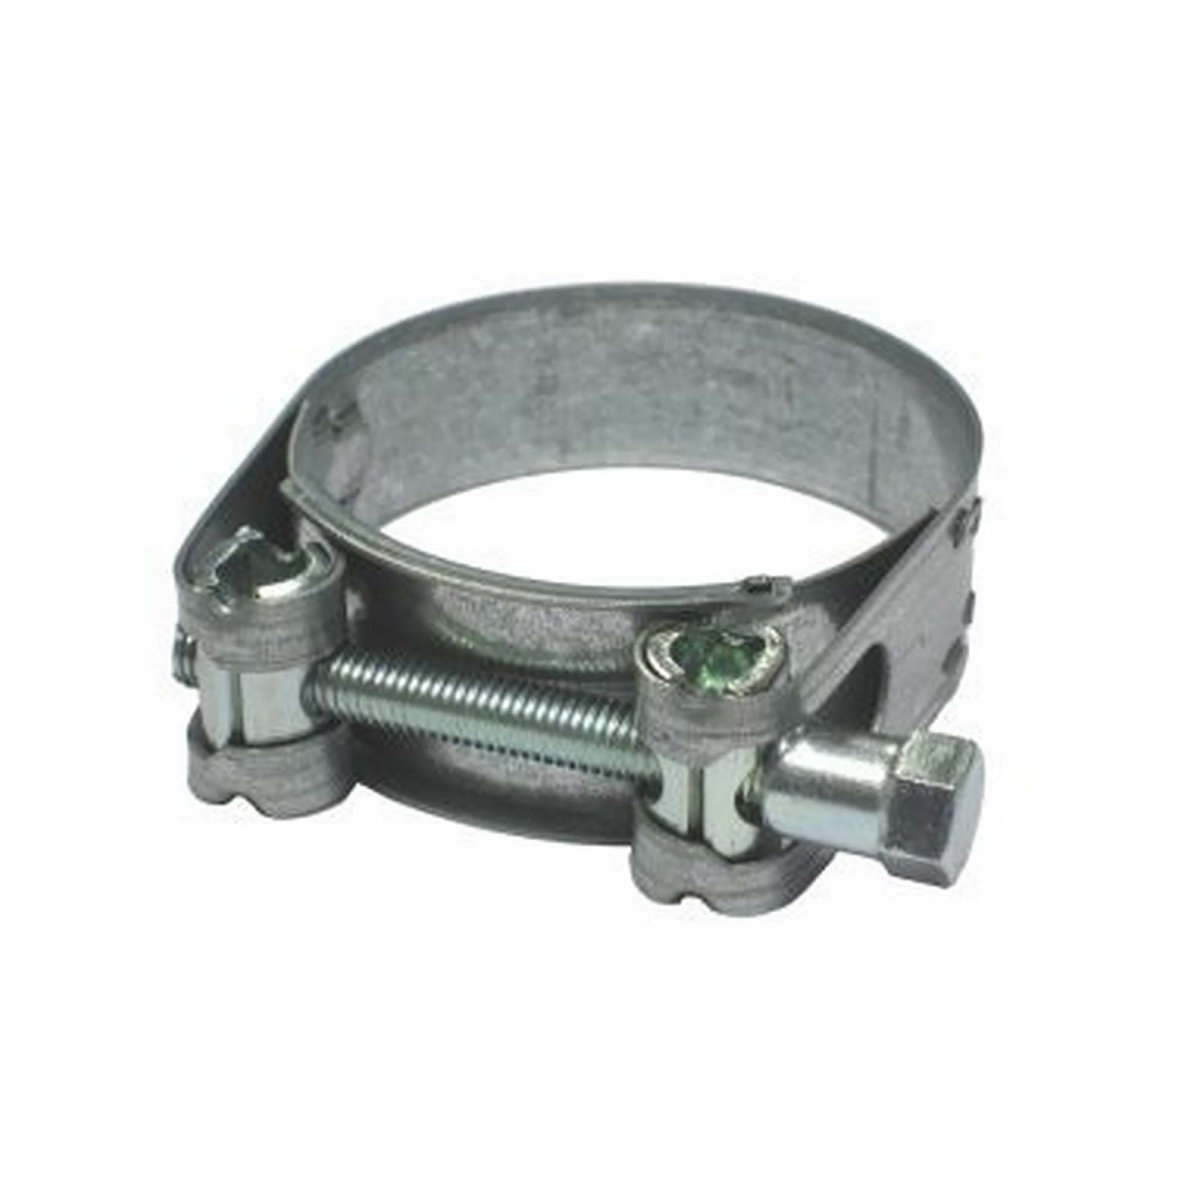 FAMEFORM high-pressure-resistant bolt hose clamps all sizes (steel) - PARTS33 GmbH